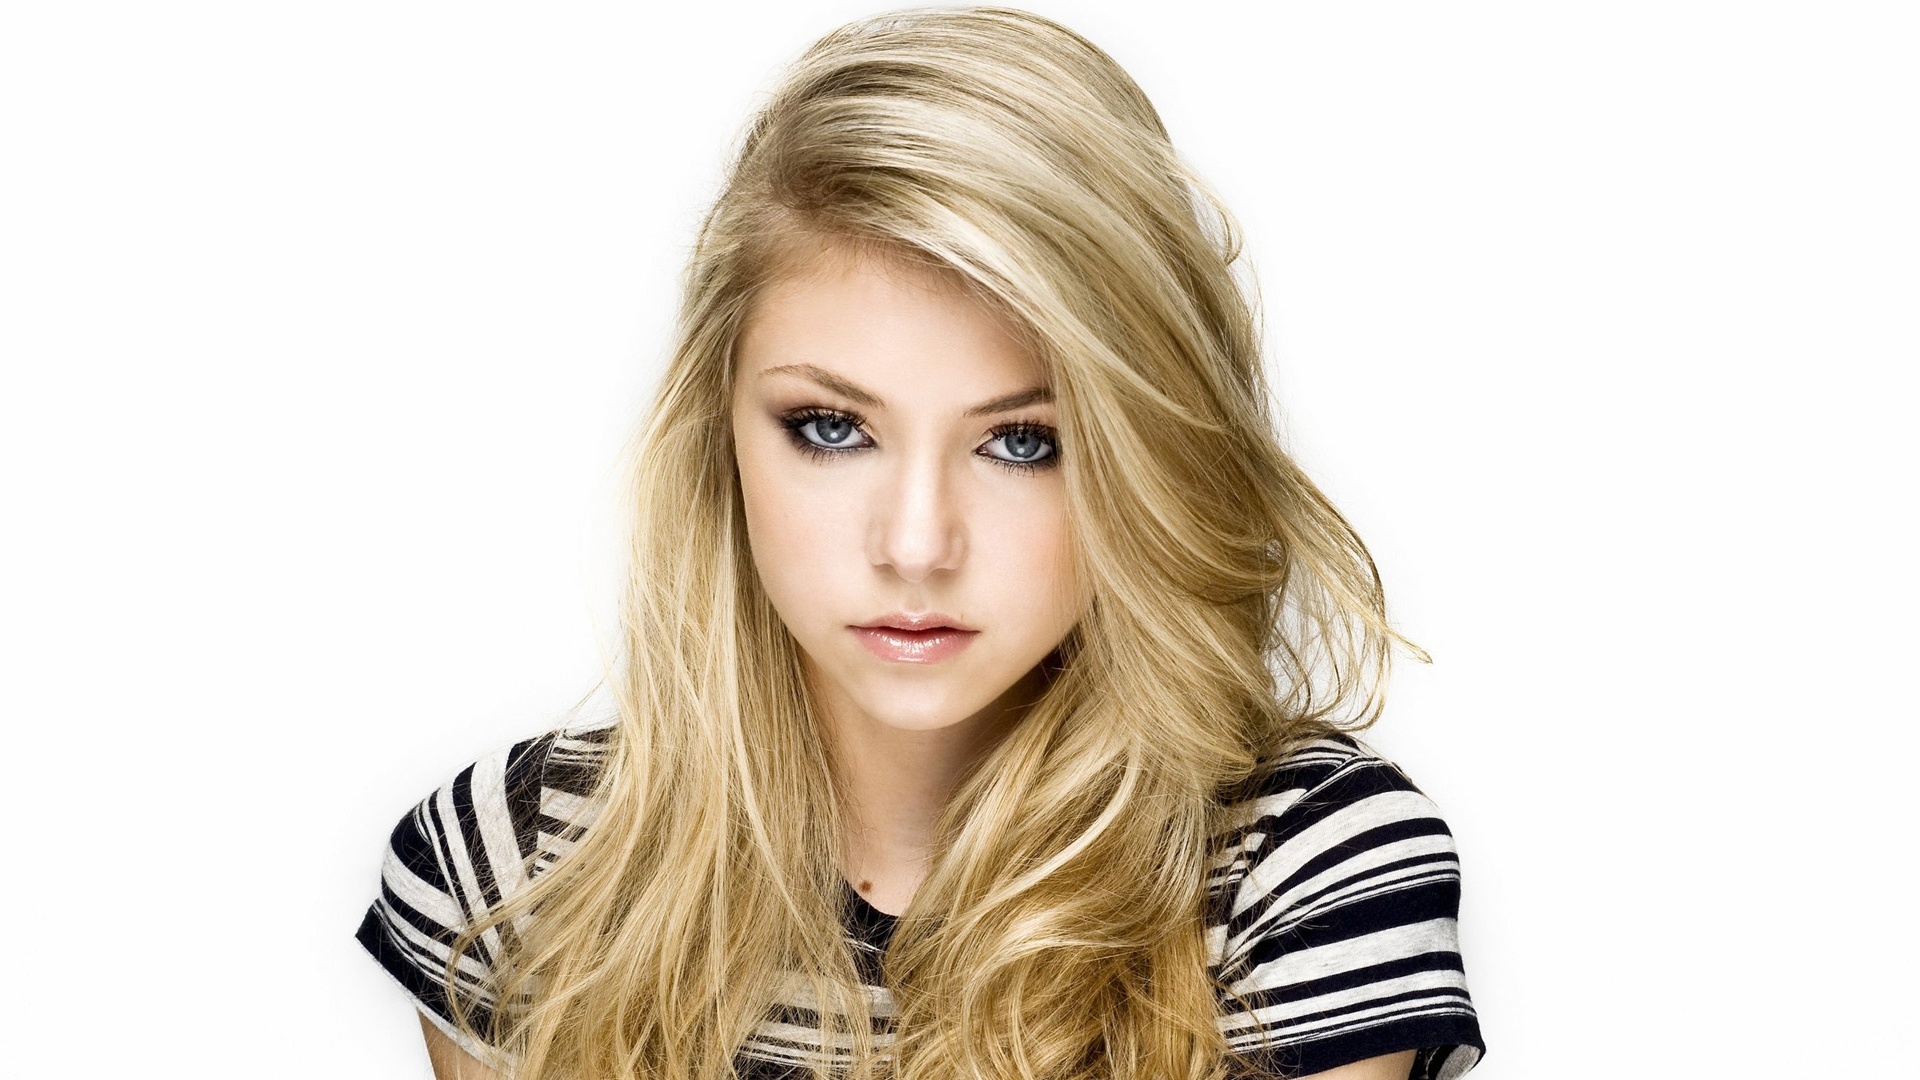  taylor momsen blonde celebrity actress cute teen wallpaper